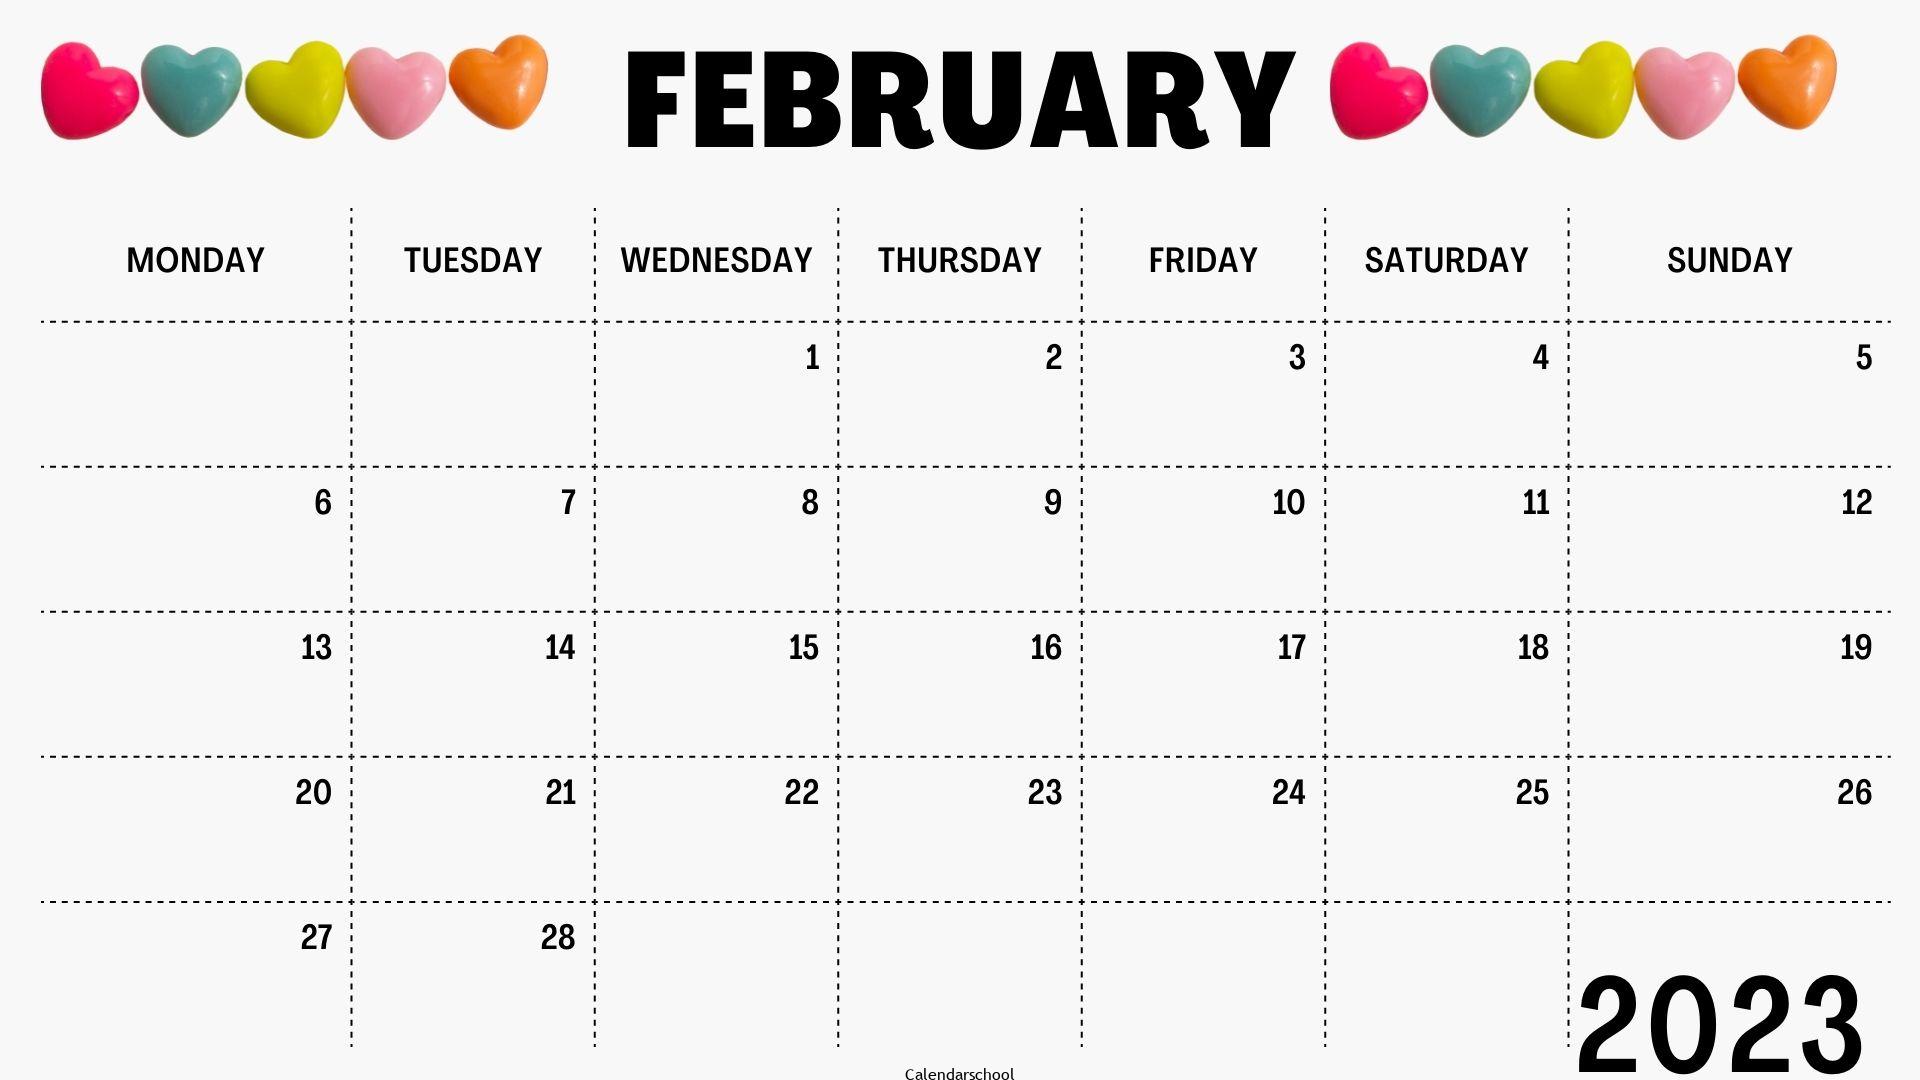 Calendar February 2023 With Holidays